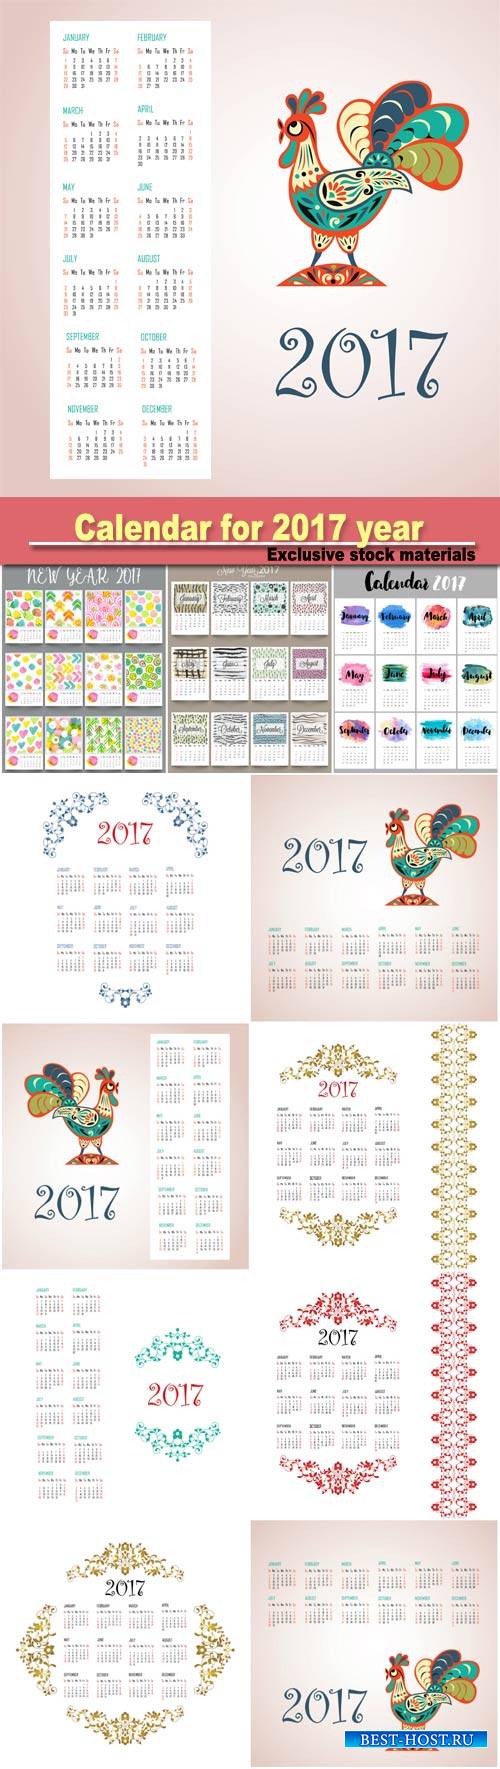 Calendar design for New Year 2017